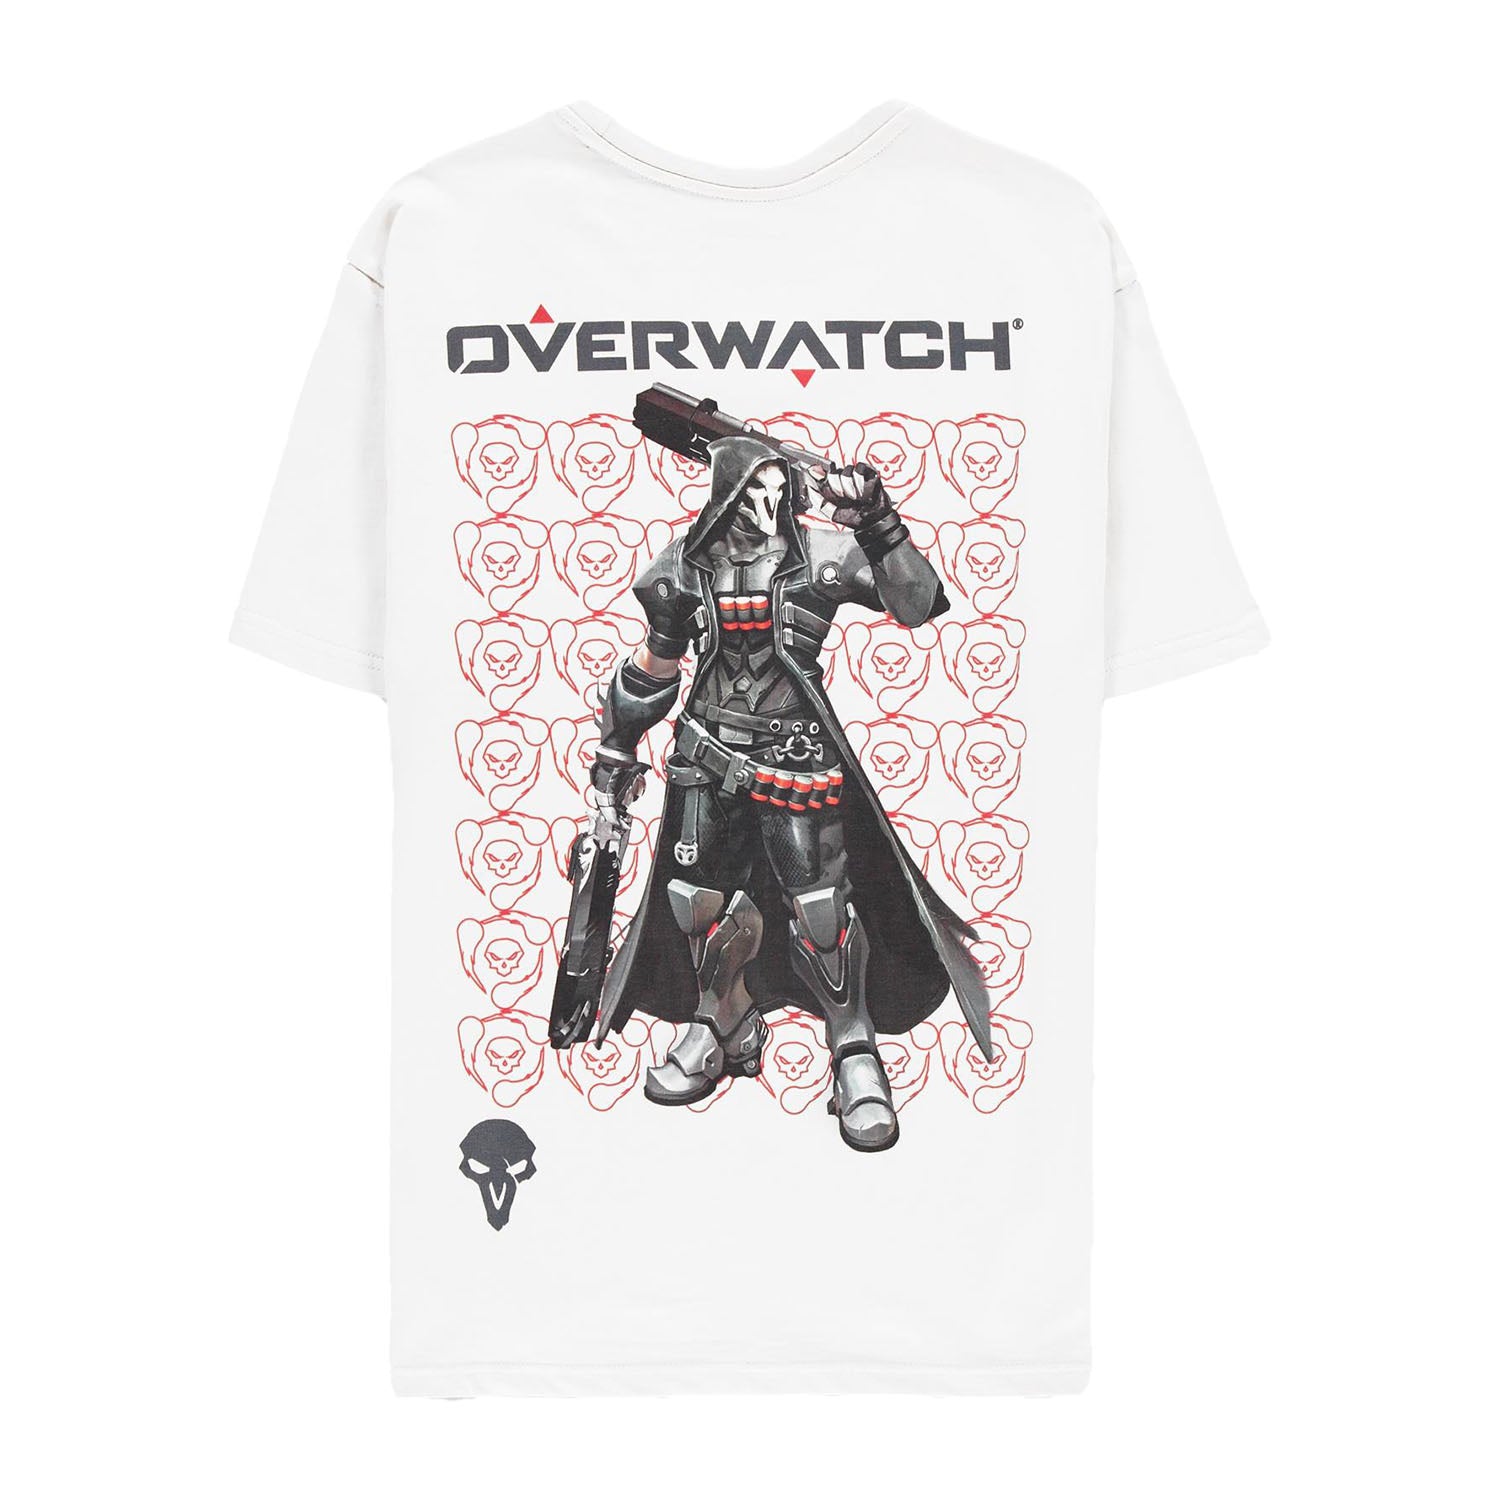 Overwatch Reaper White Guns T-Shirt - Back View